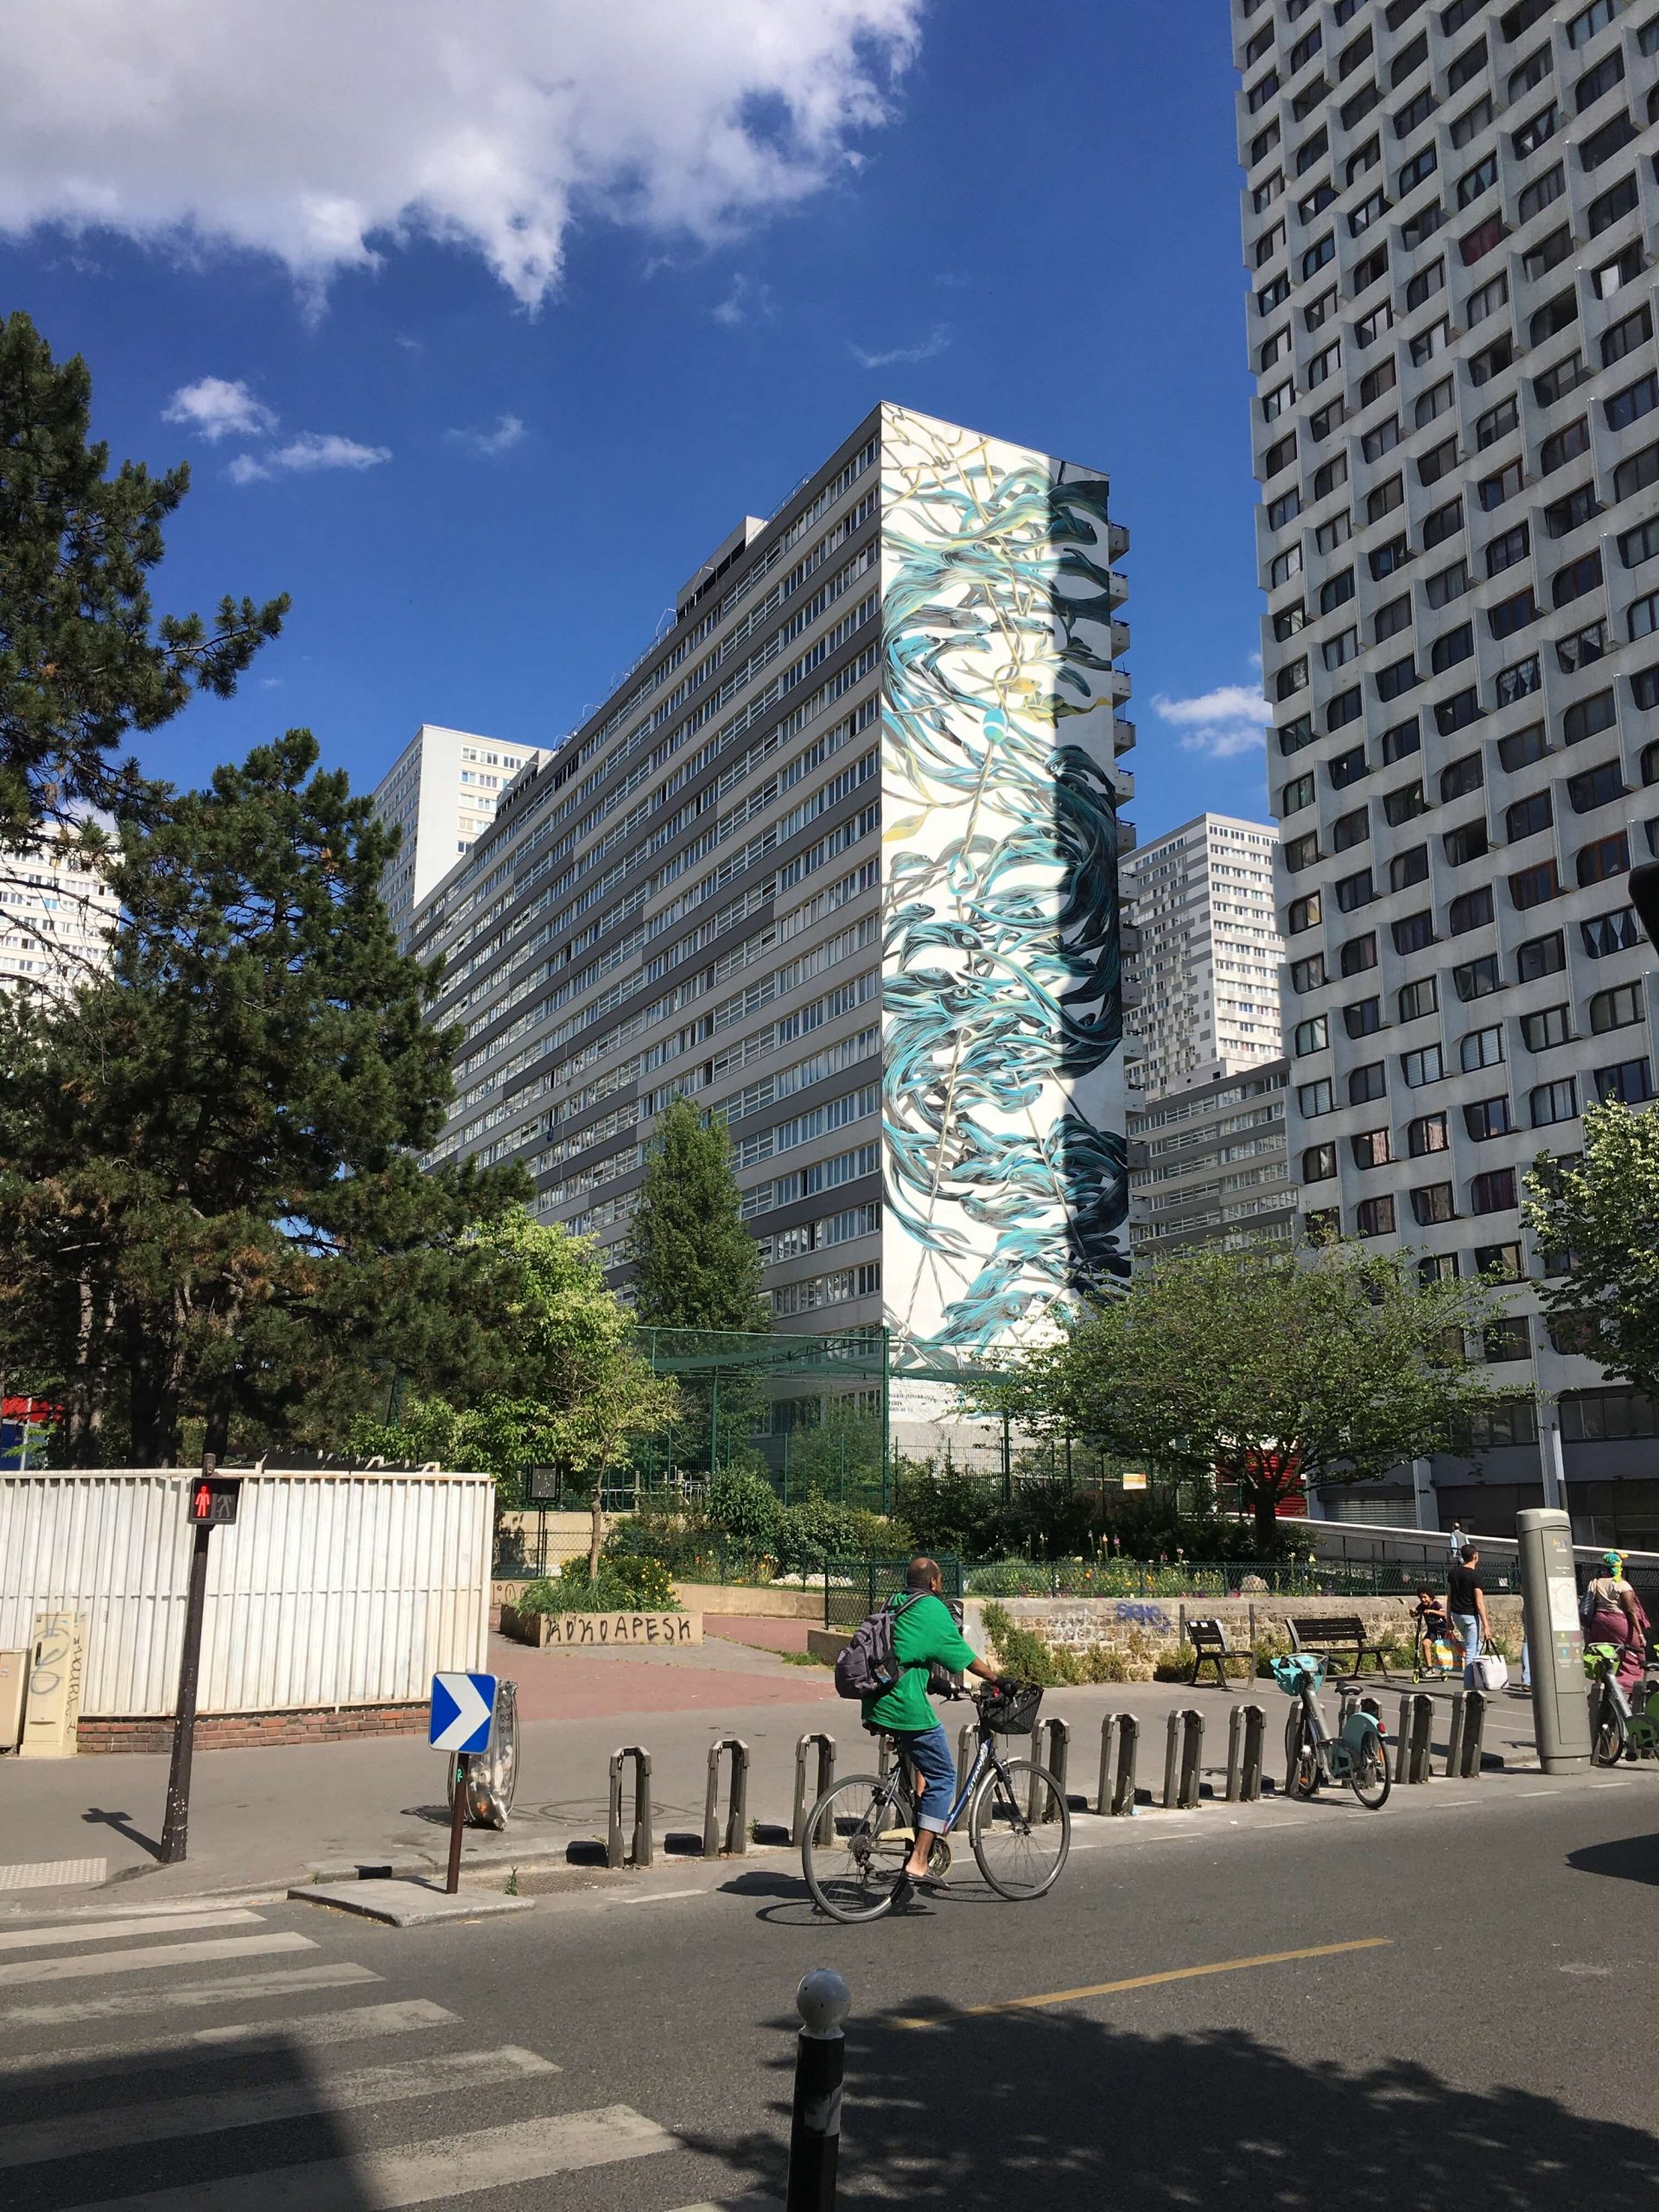 The Giant Murals in Paris